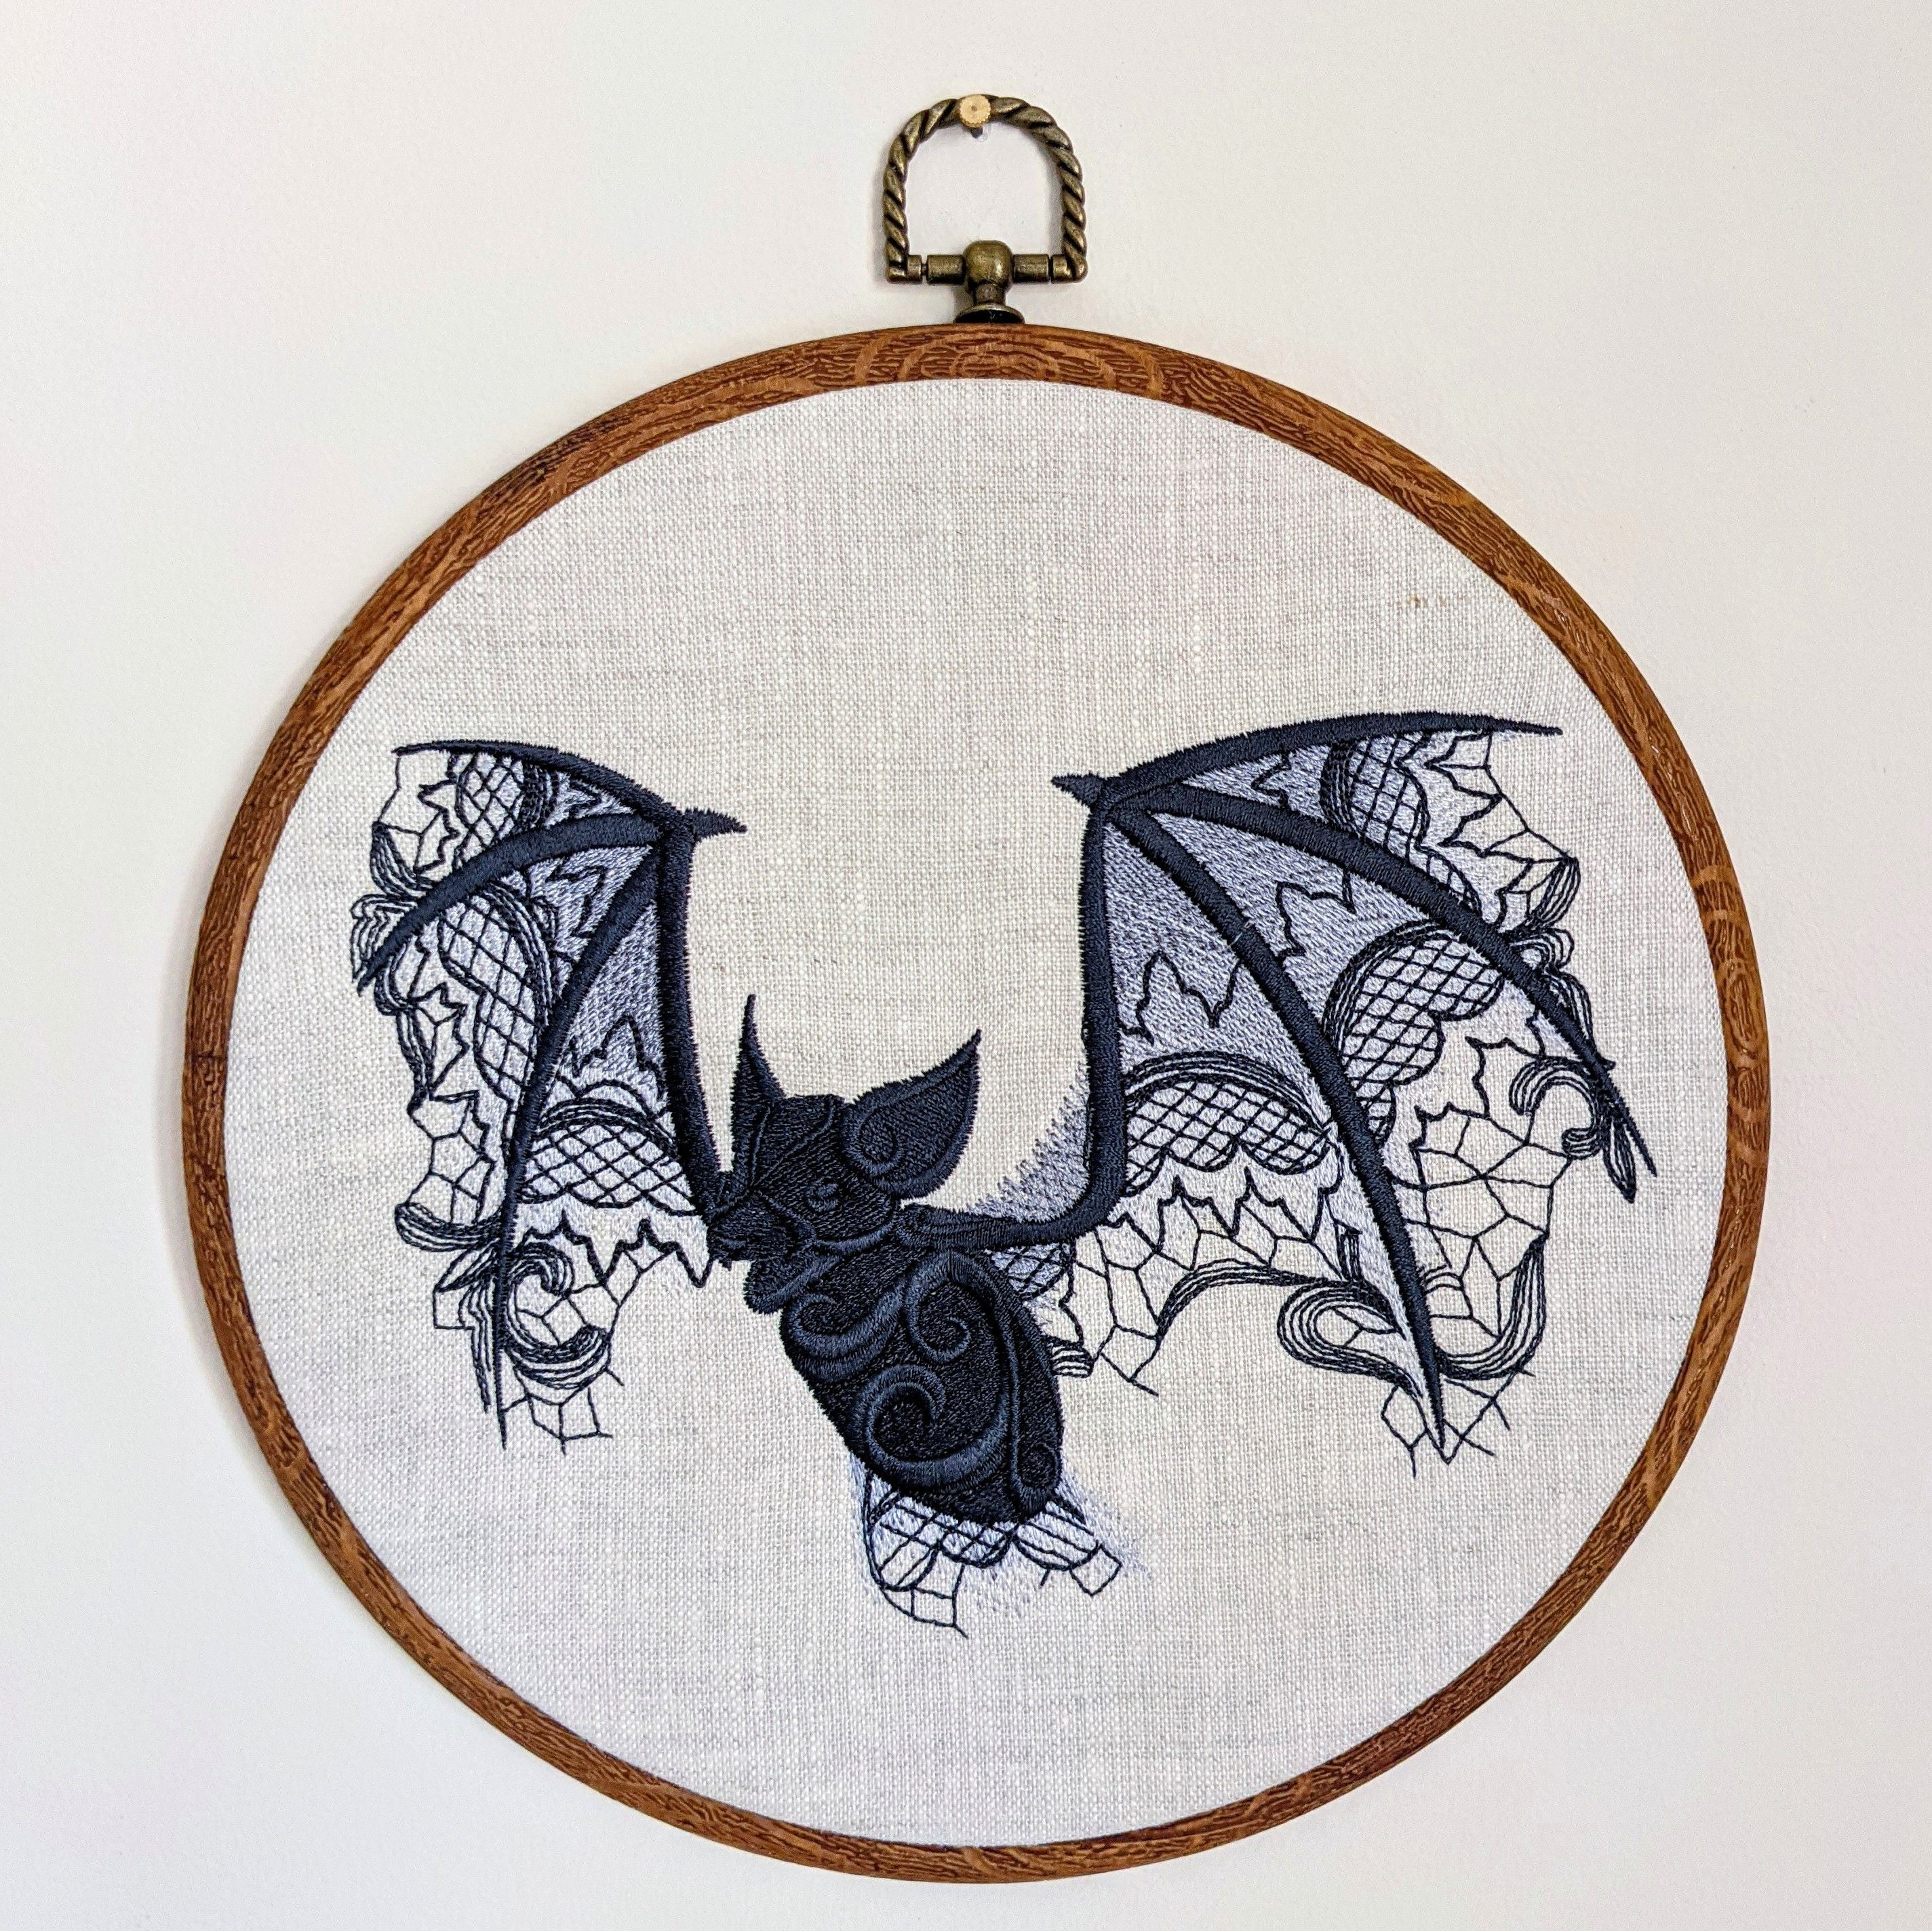 Lace Bat tonal greys onto natural linen, Hoop Art, machine embroidered 8" hoop